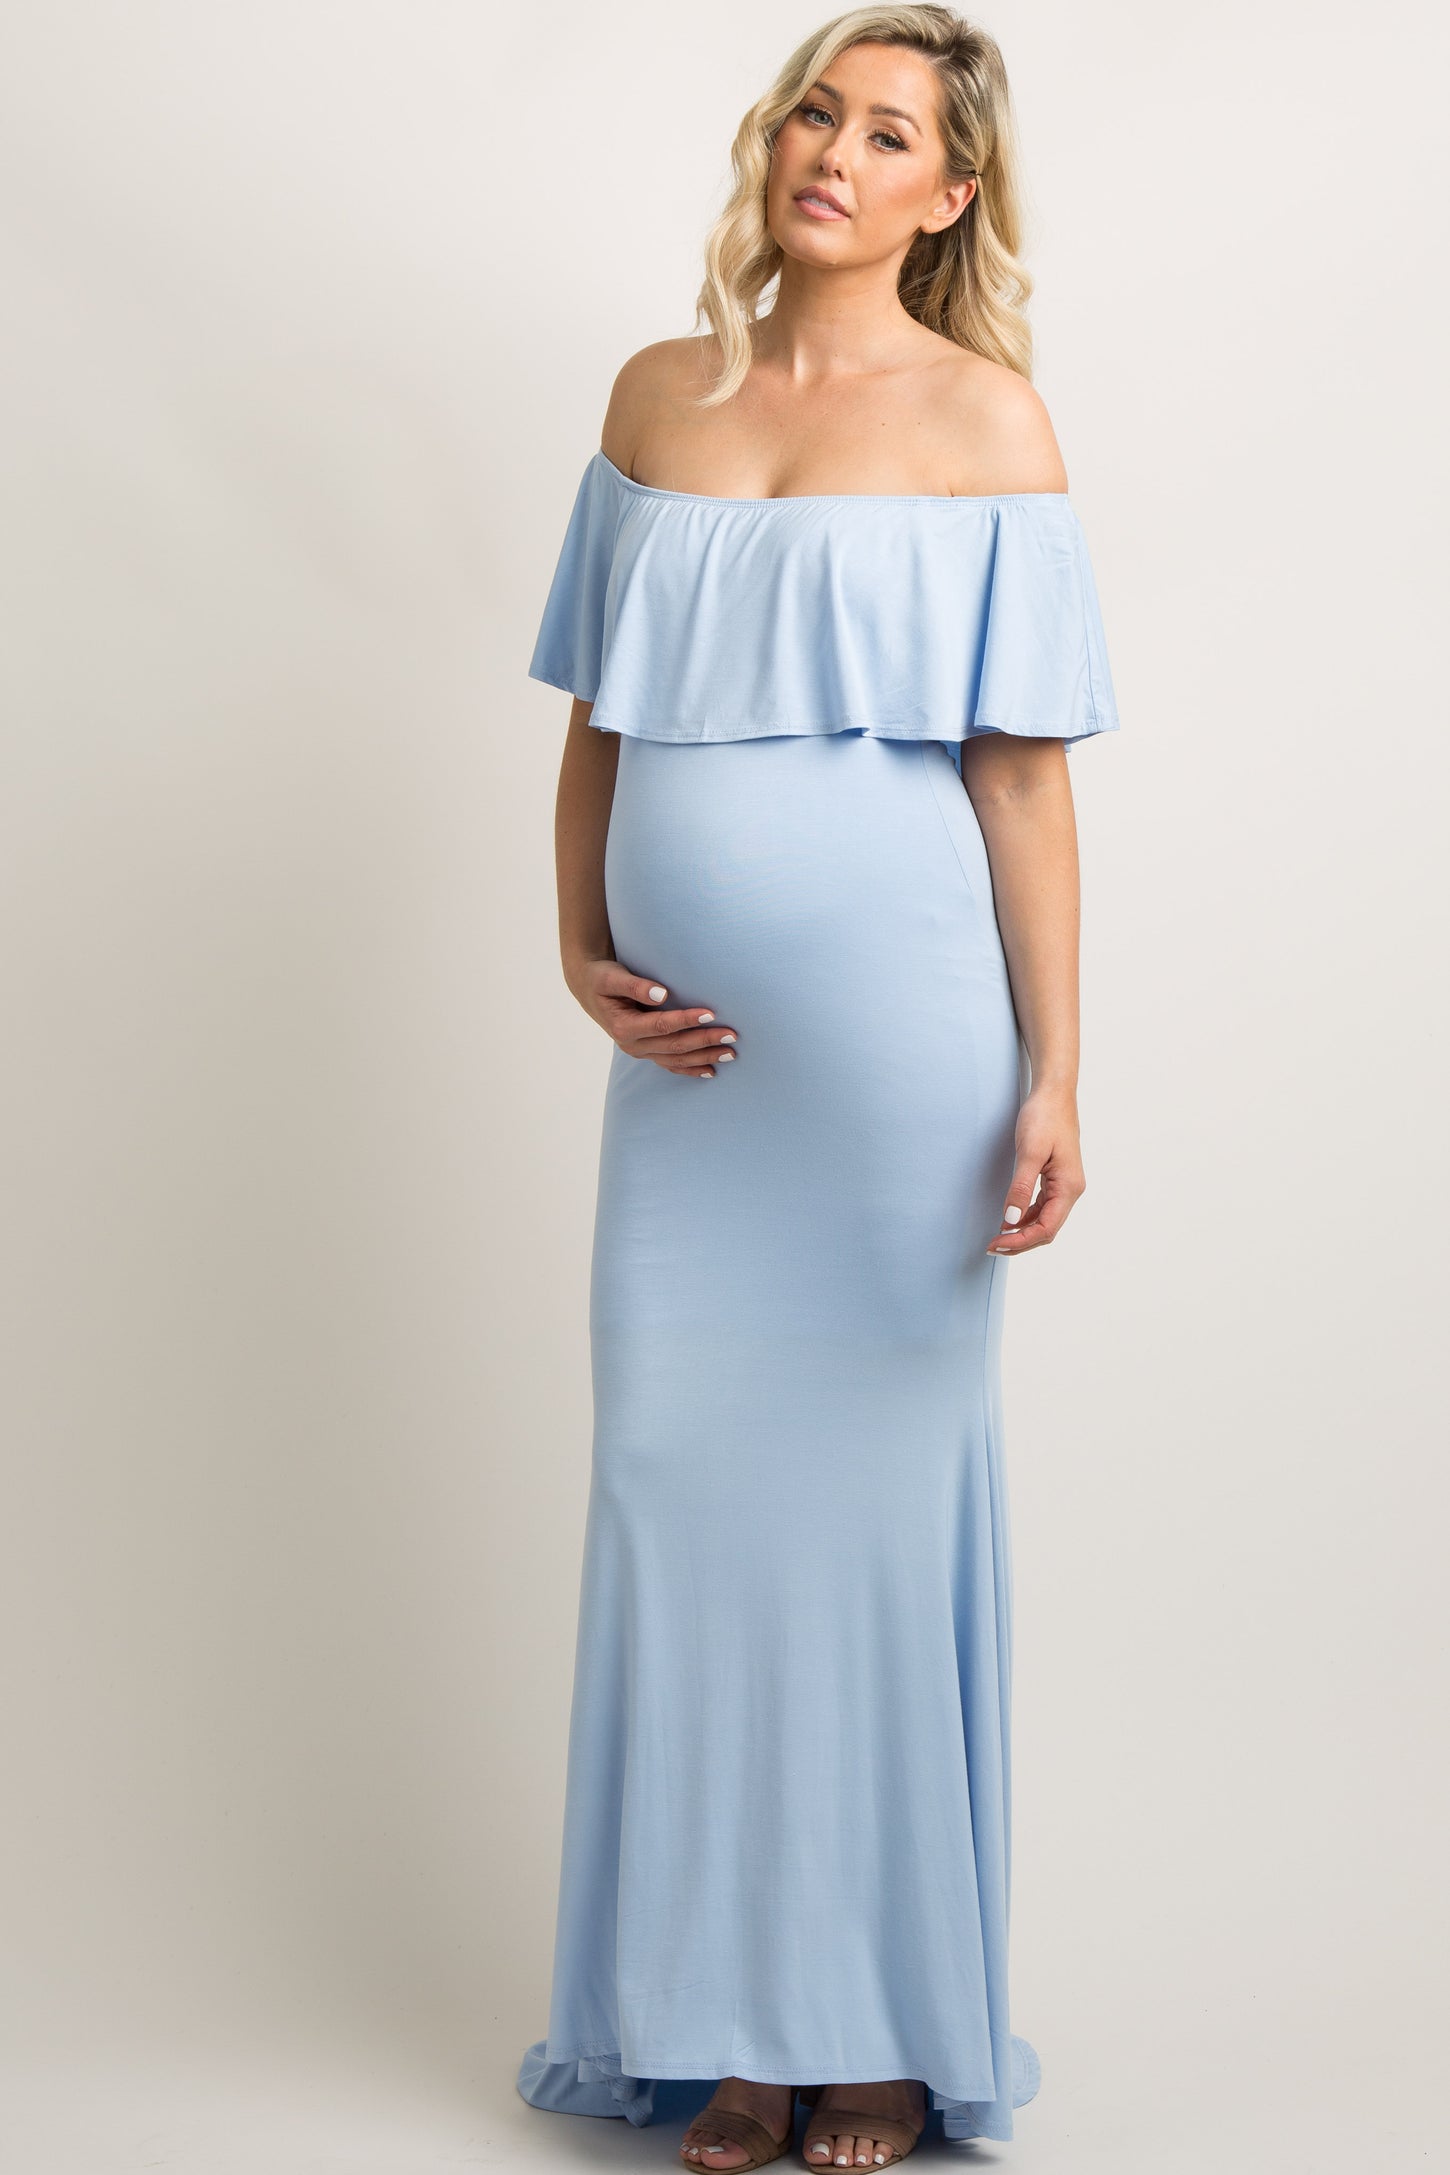 PinkBlush Light Blue Ruffle Off Shoulder Mermaid Maternity Photoshoot Gown/Dress